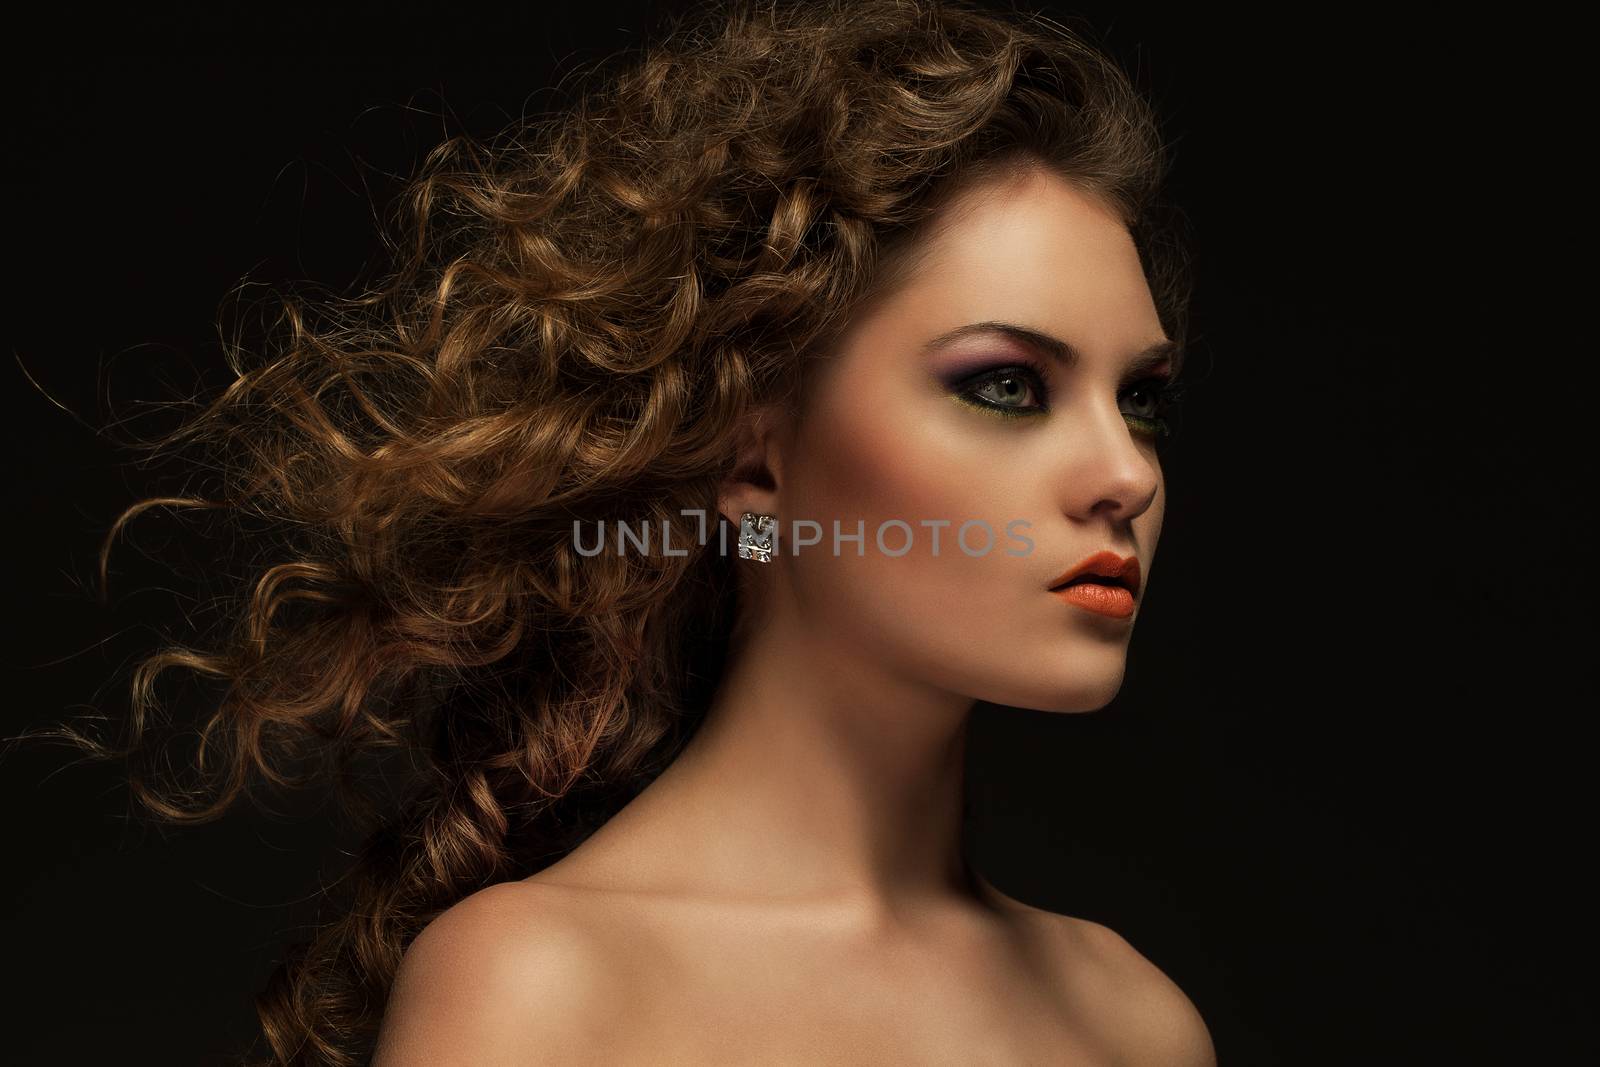 Beautiful woman with curls and makeup by rufatjumali